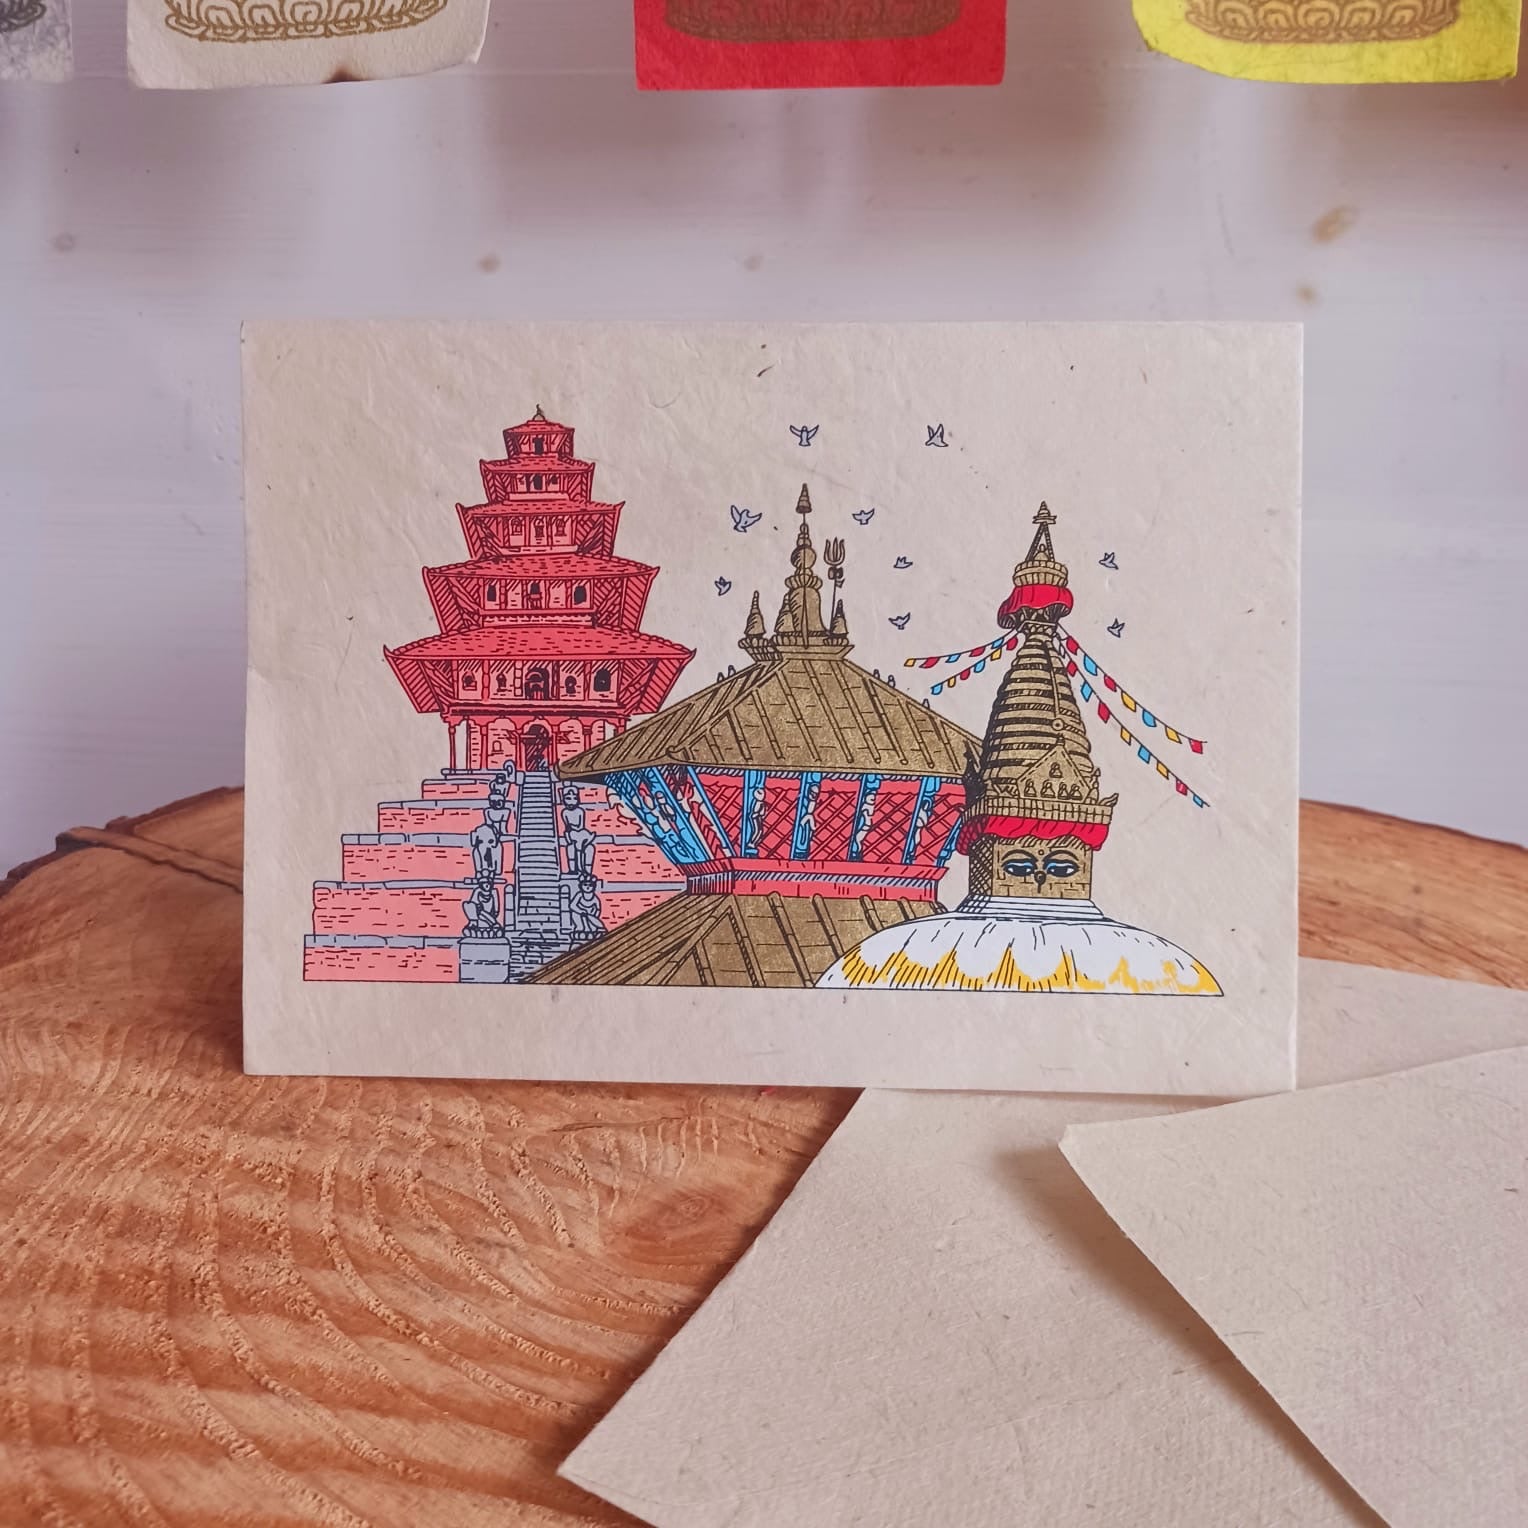 Lokta Paper Greetings Card | Temple of Kathmandu